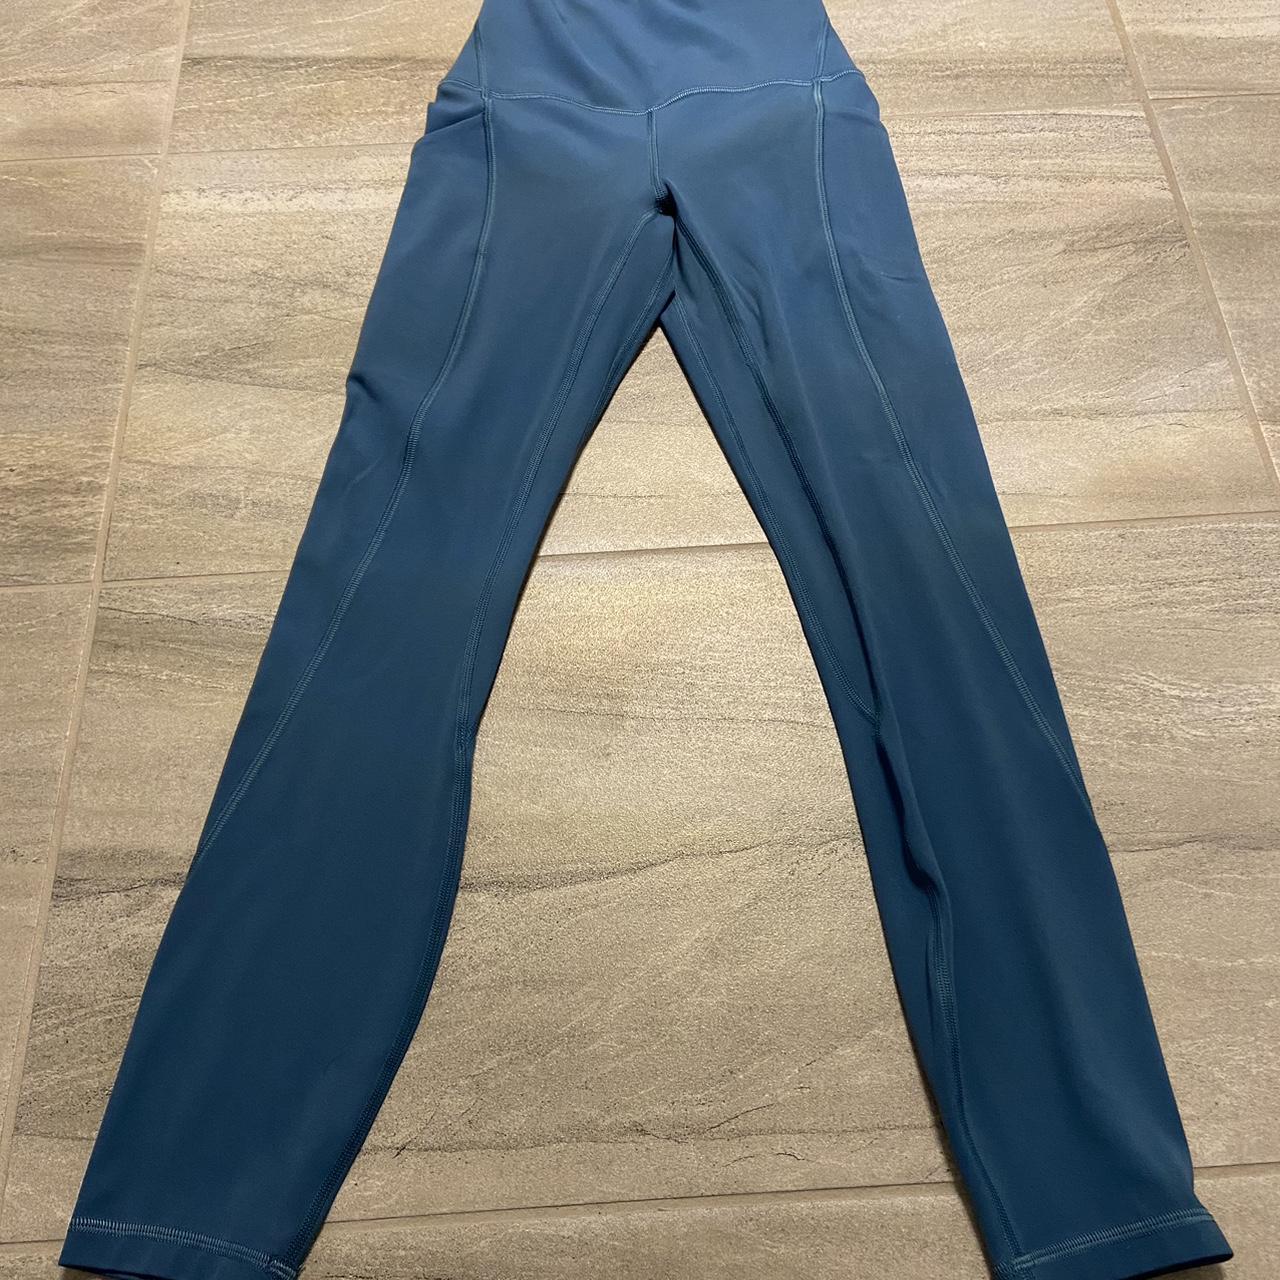 capri blue align leggings with pockets 25” - Depop